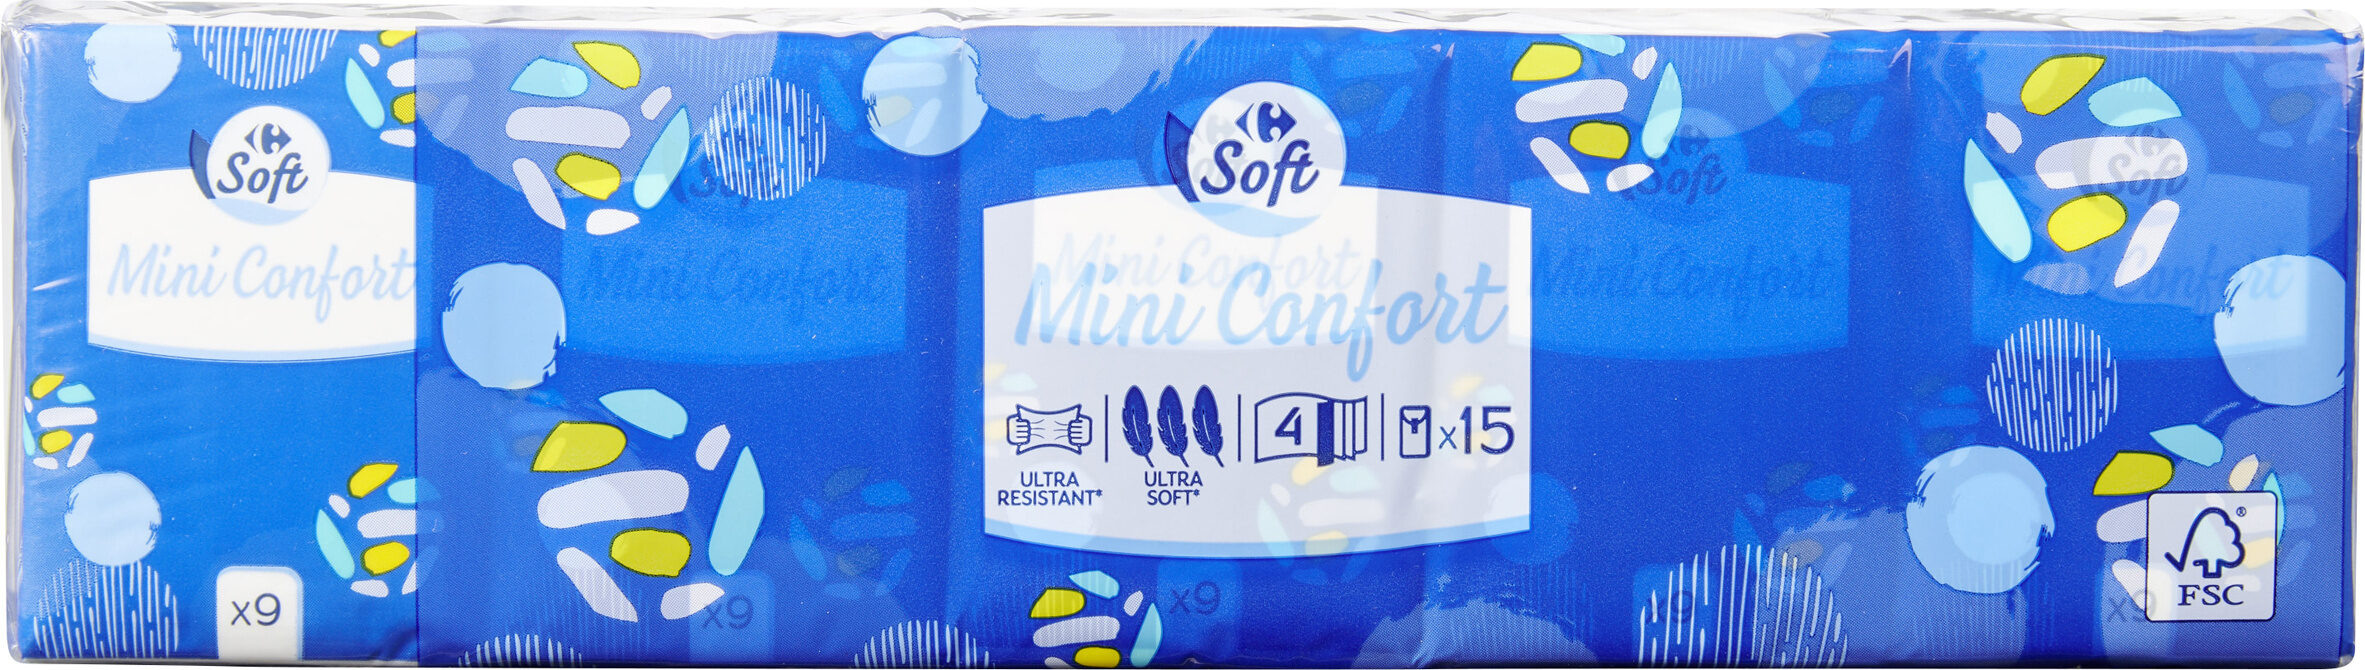 mini confort - Product - fr